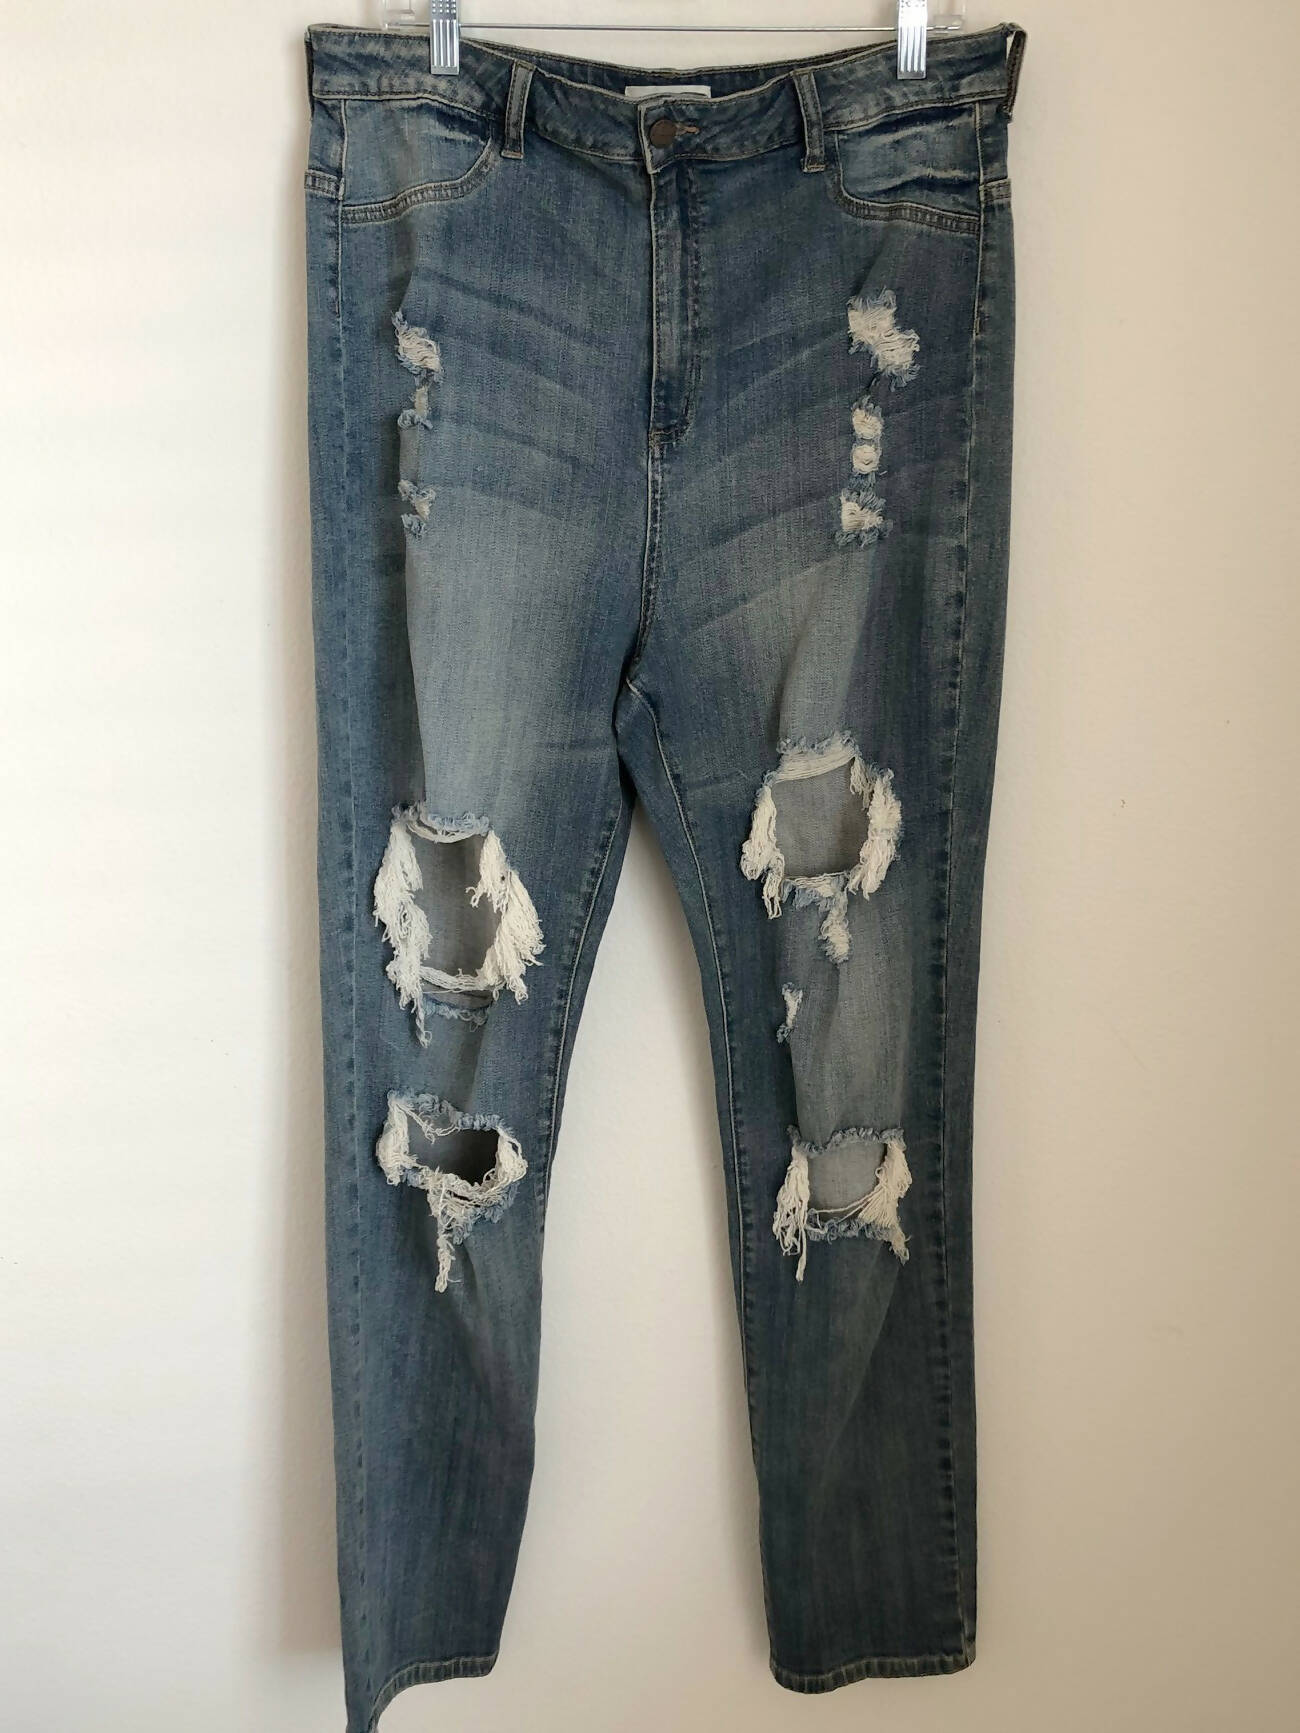 Distressed comfy denim jeans